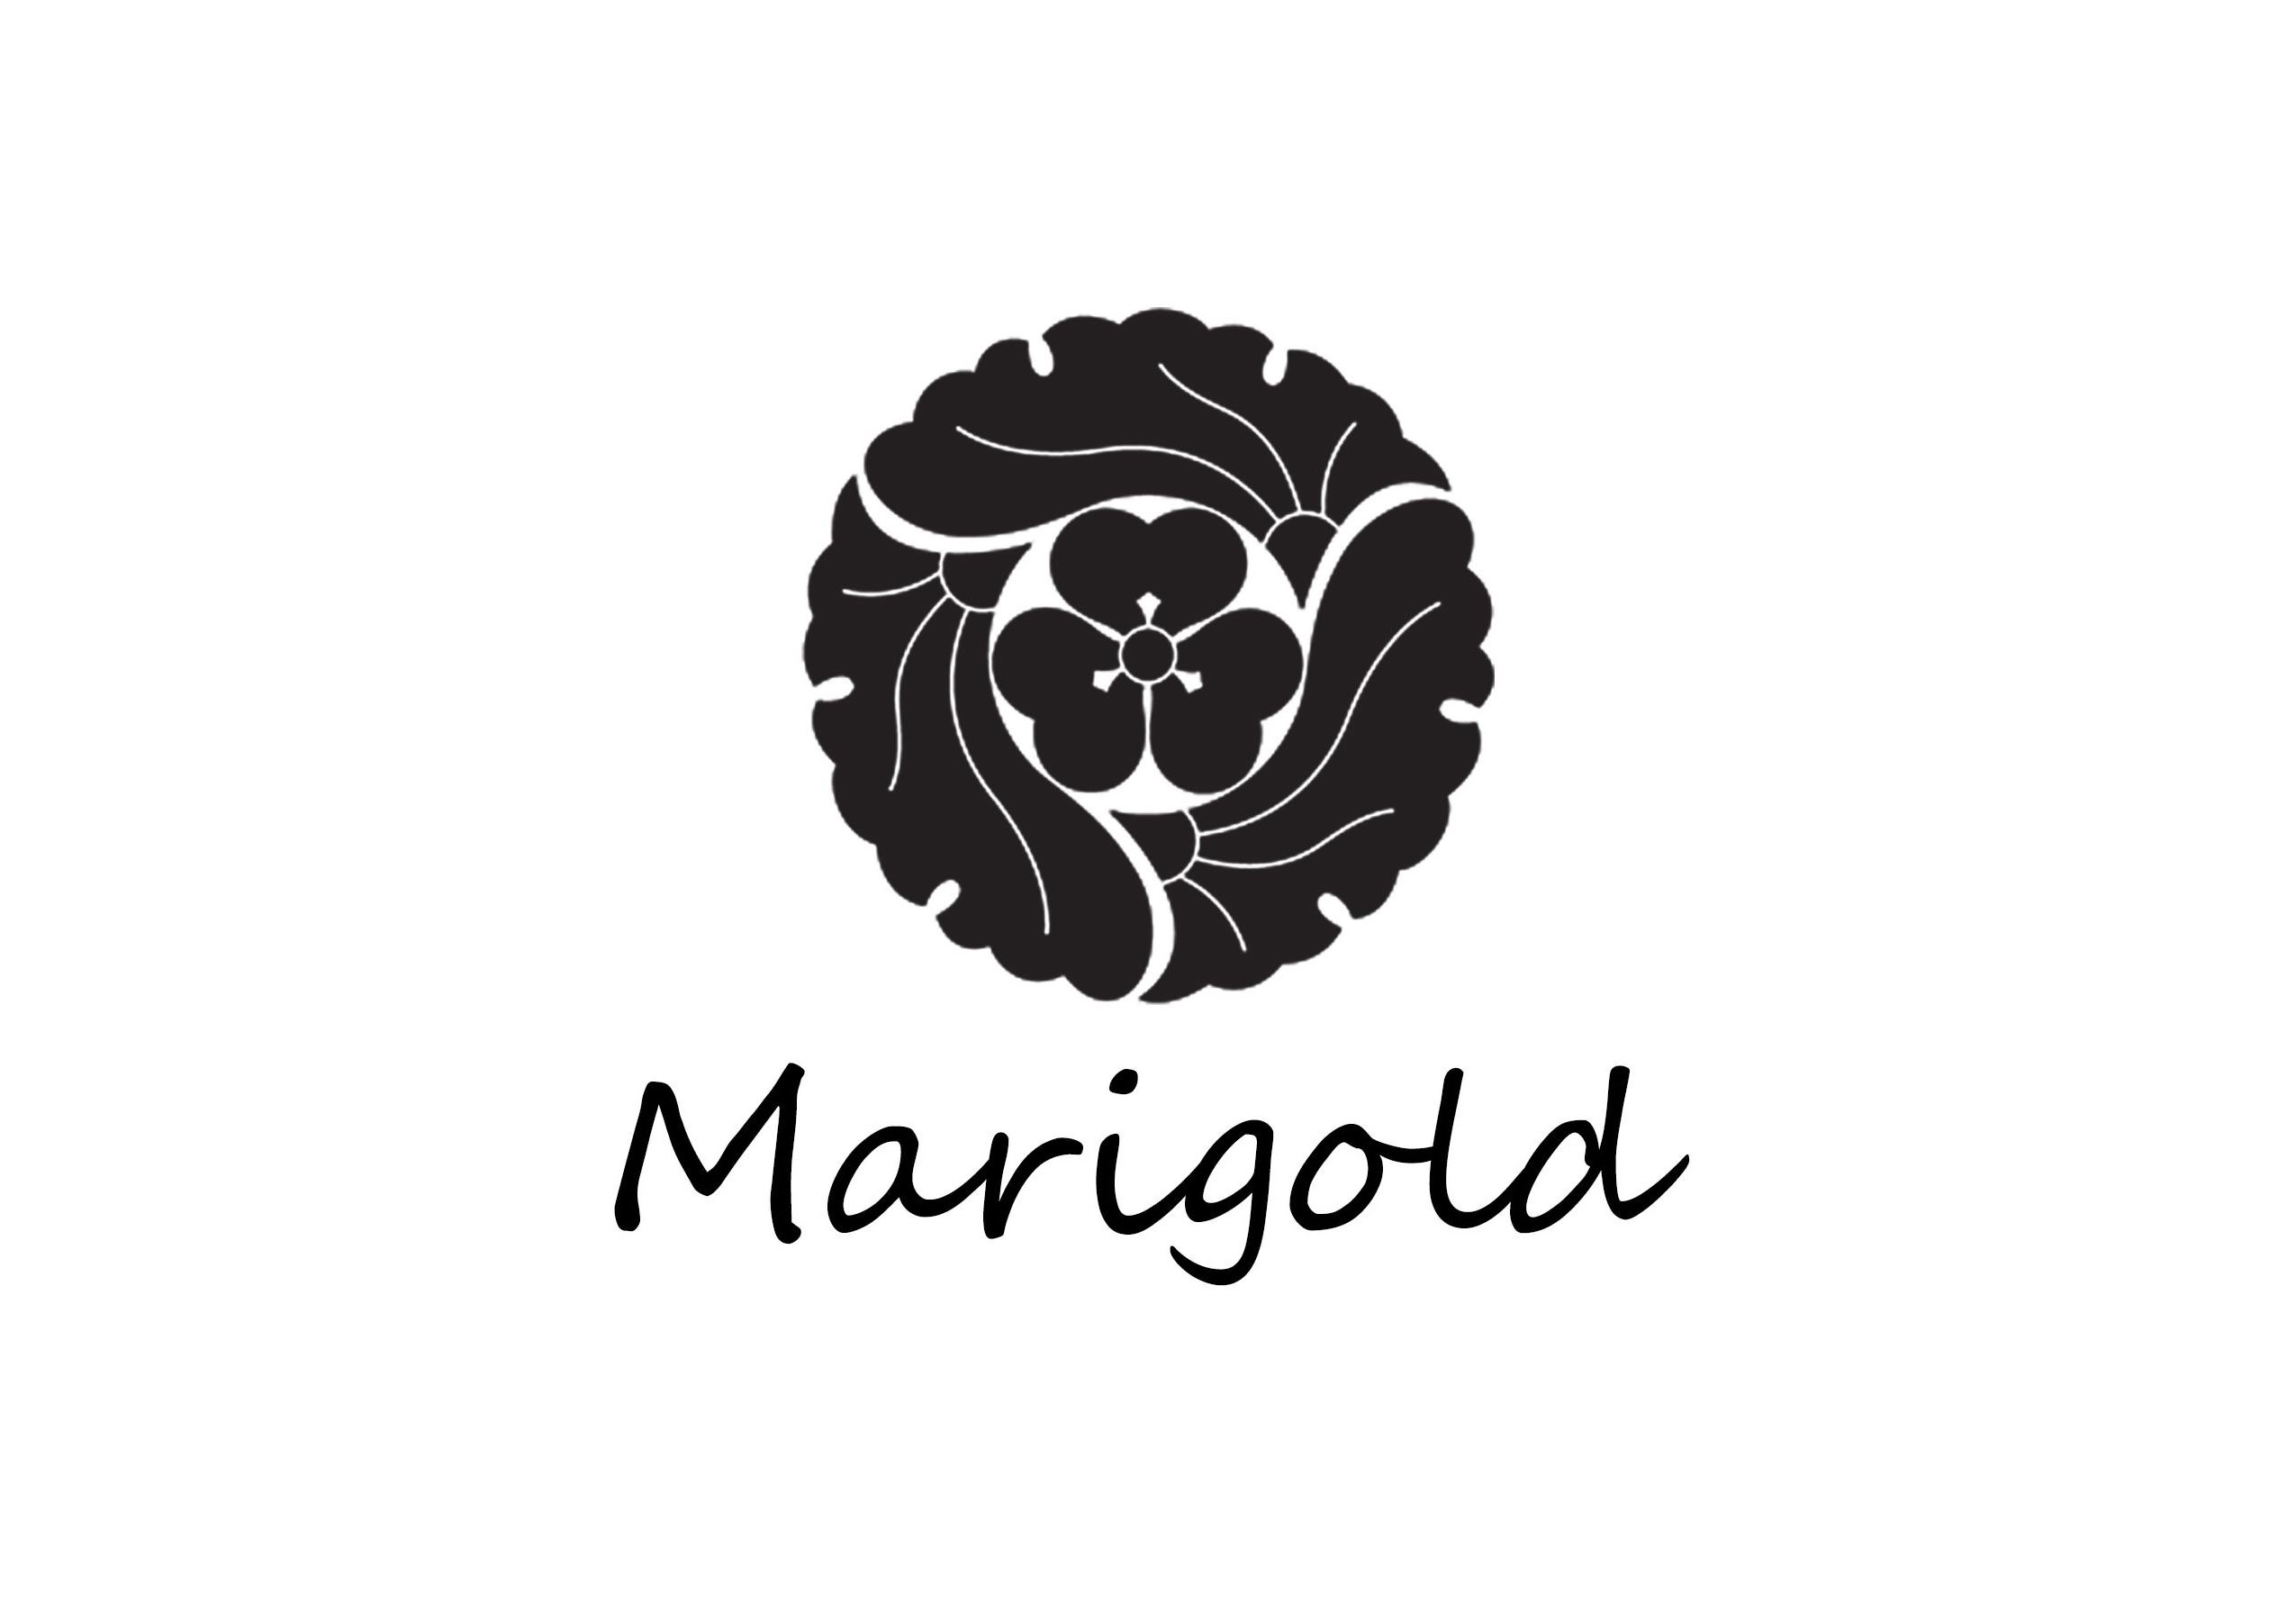 MARIGOLD Marigold Enterprises Co, LTD Trademark Registration